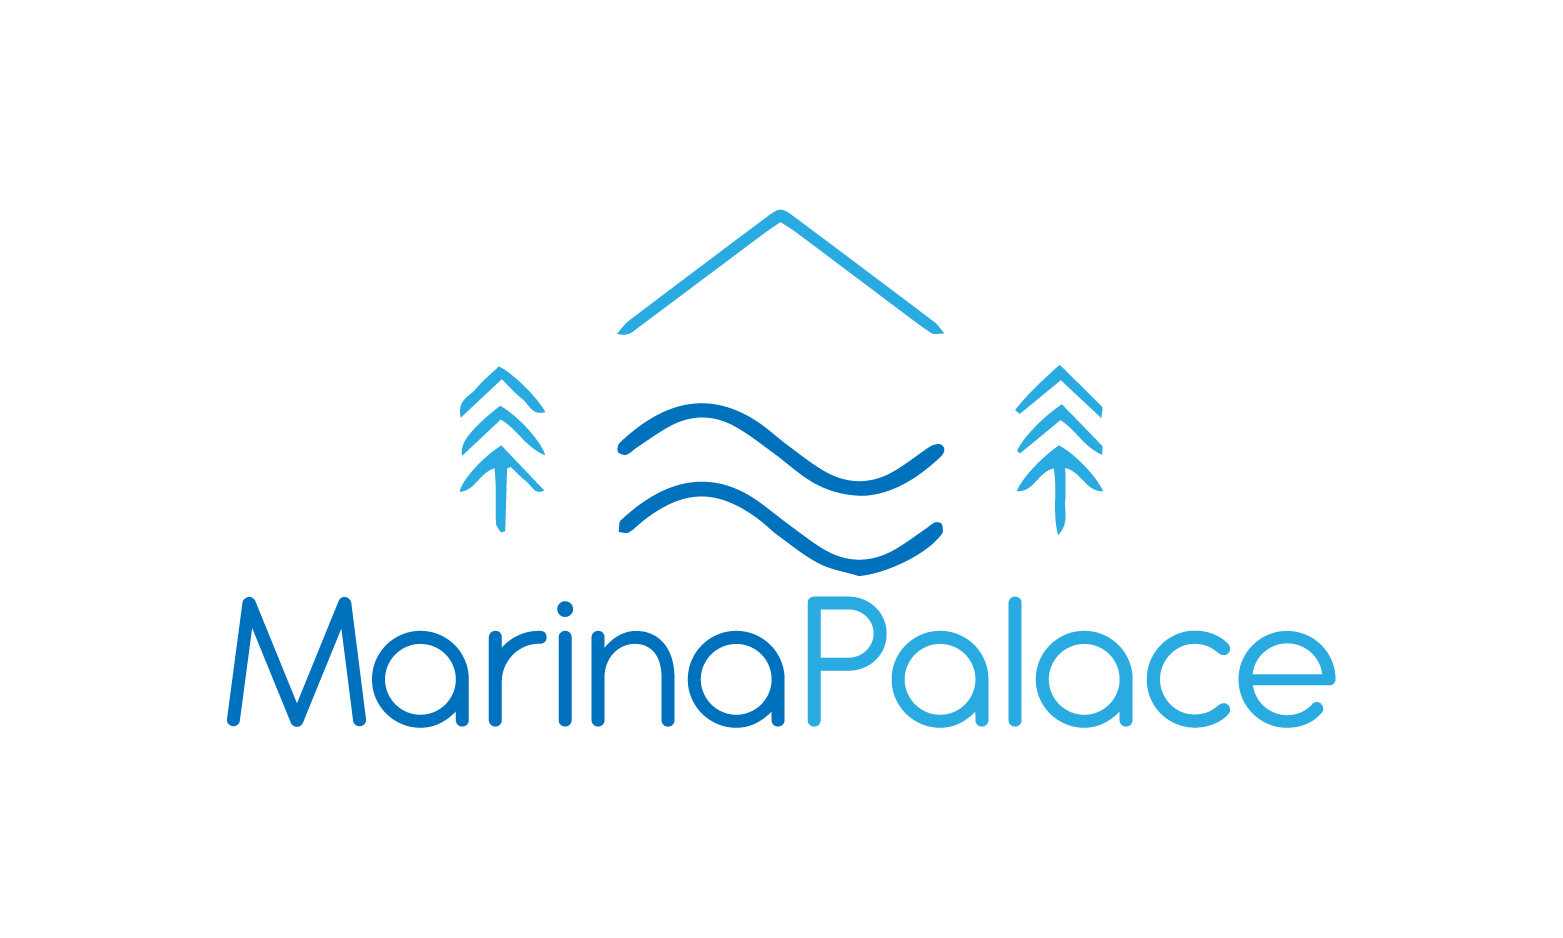 MarinaPalace.com - Creative brandable domain for sale